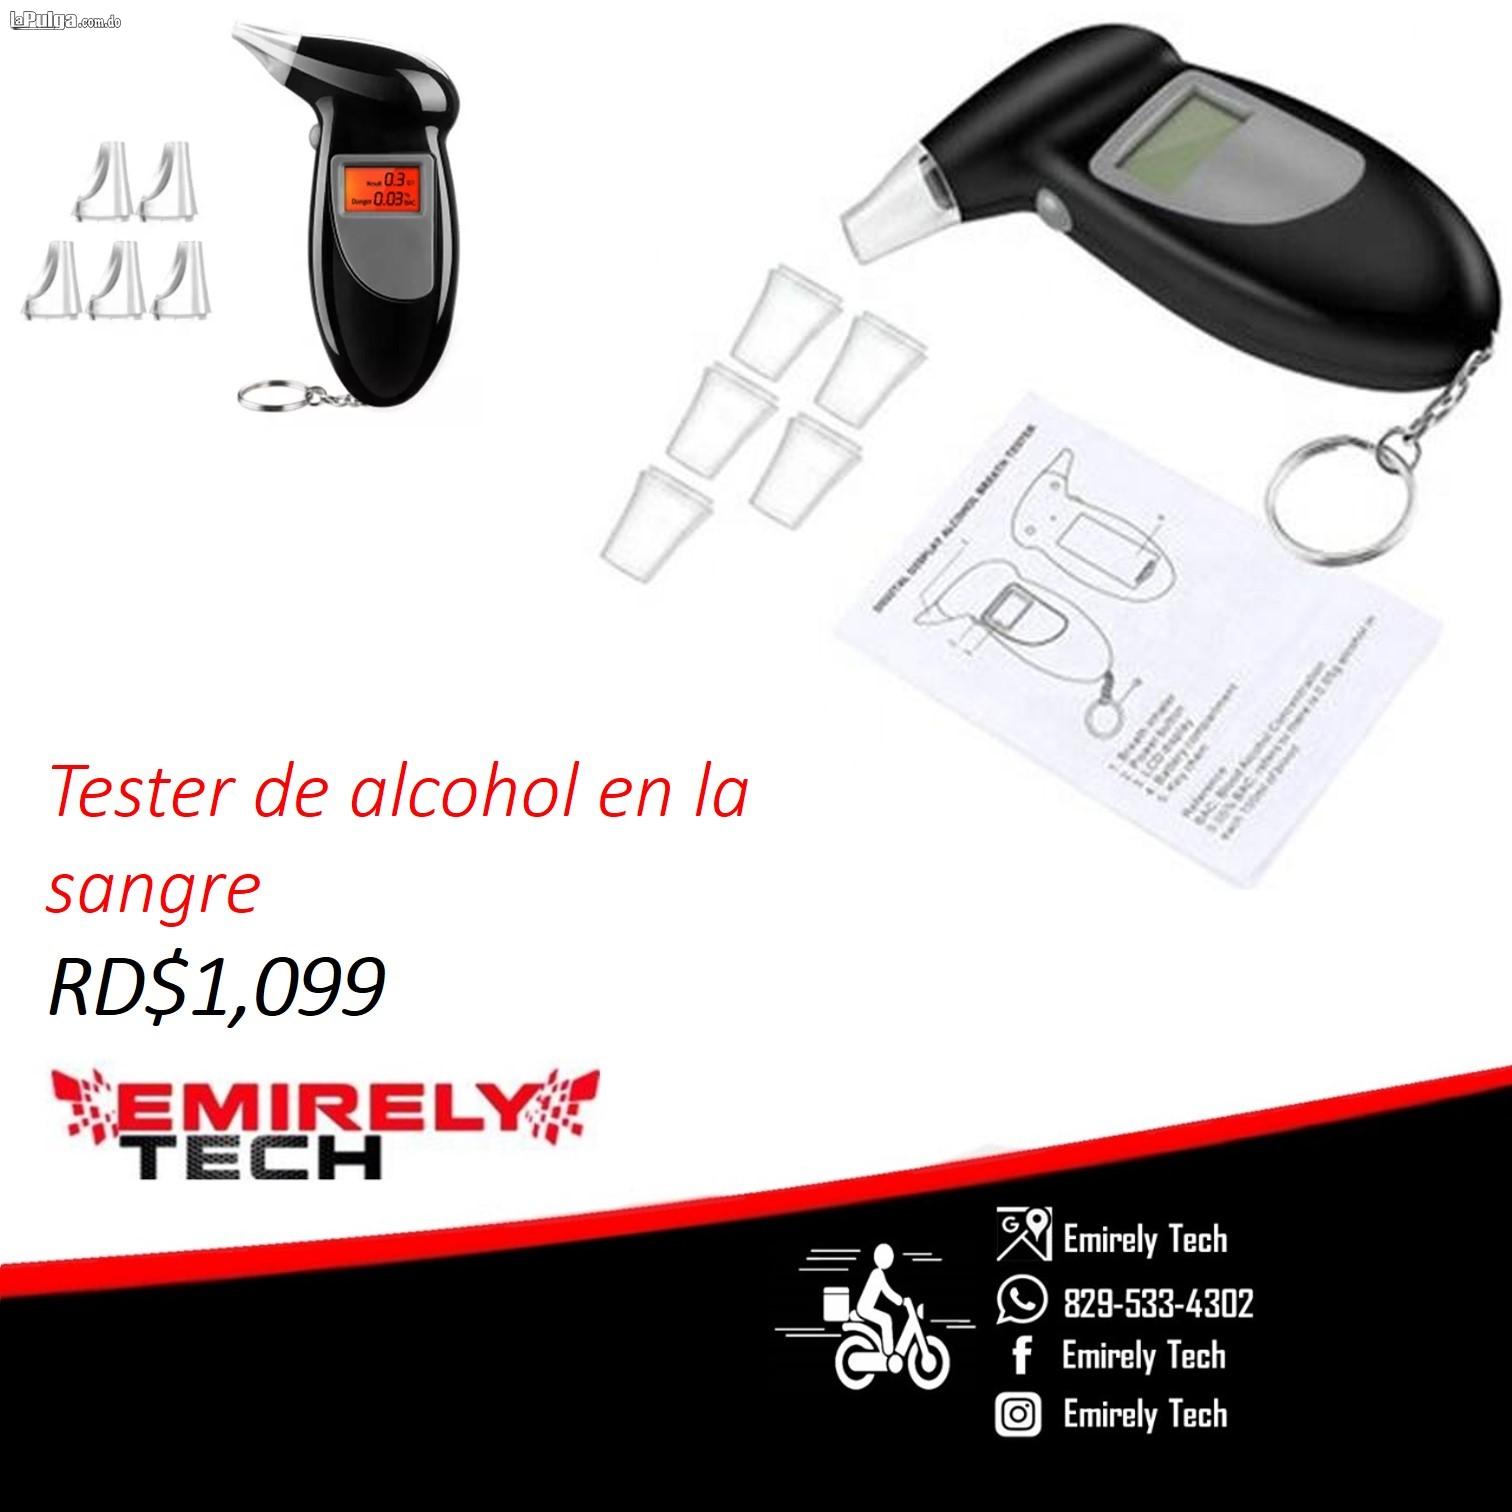 Alcoholimetro Medidor de alcohol en la sangre Tester de alcohol Foto 7113121-1.jpg